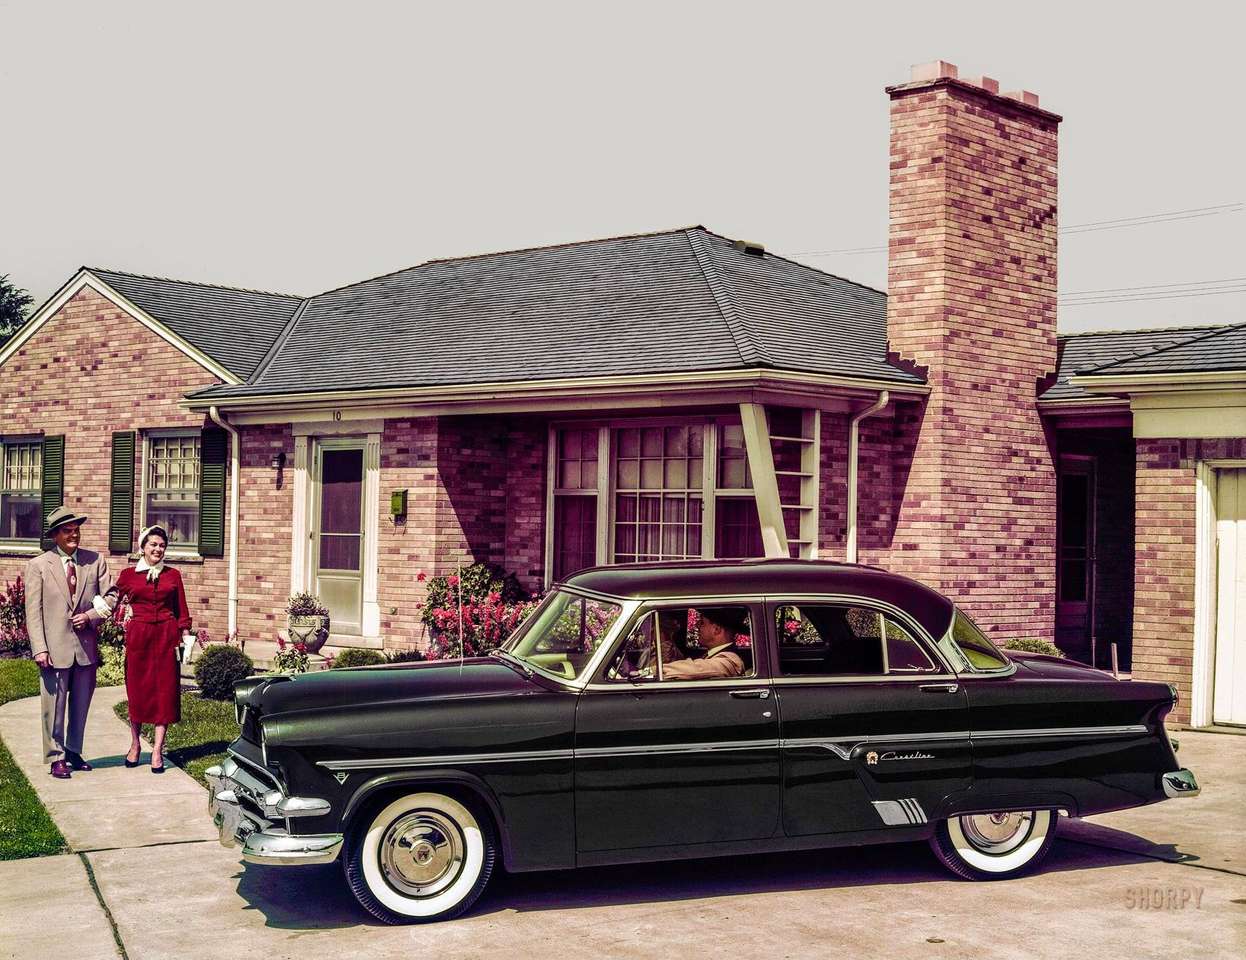 1954 Ford Crestline. Online-Puzzle